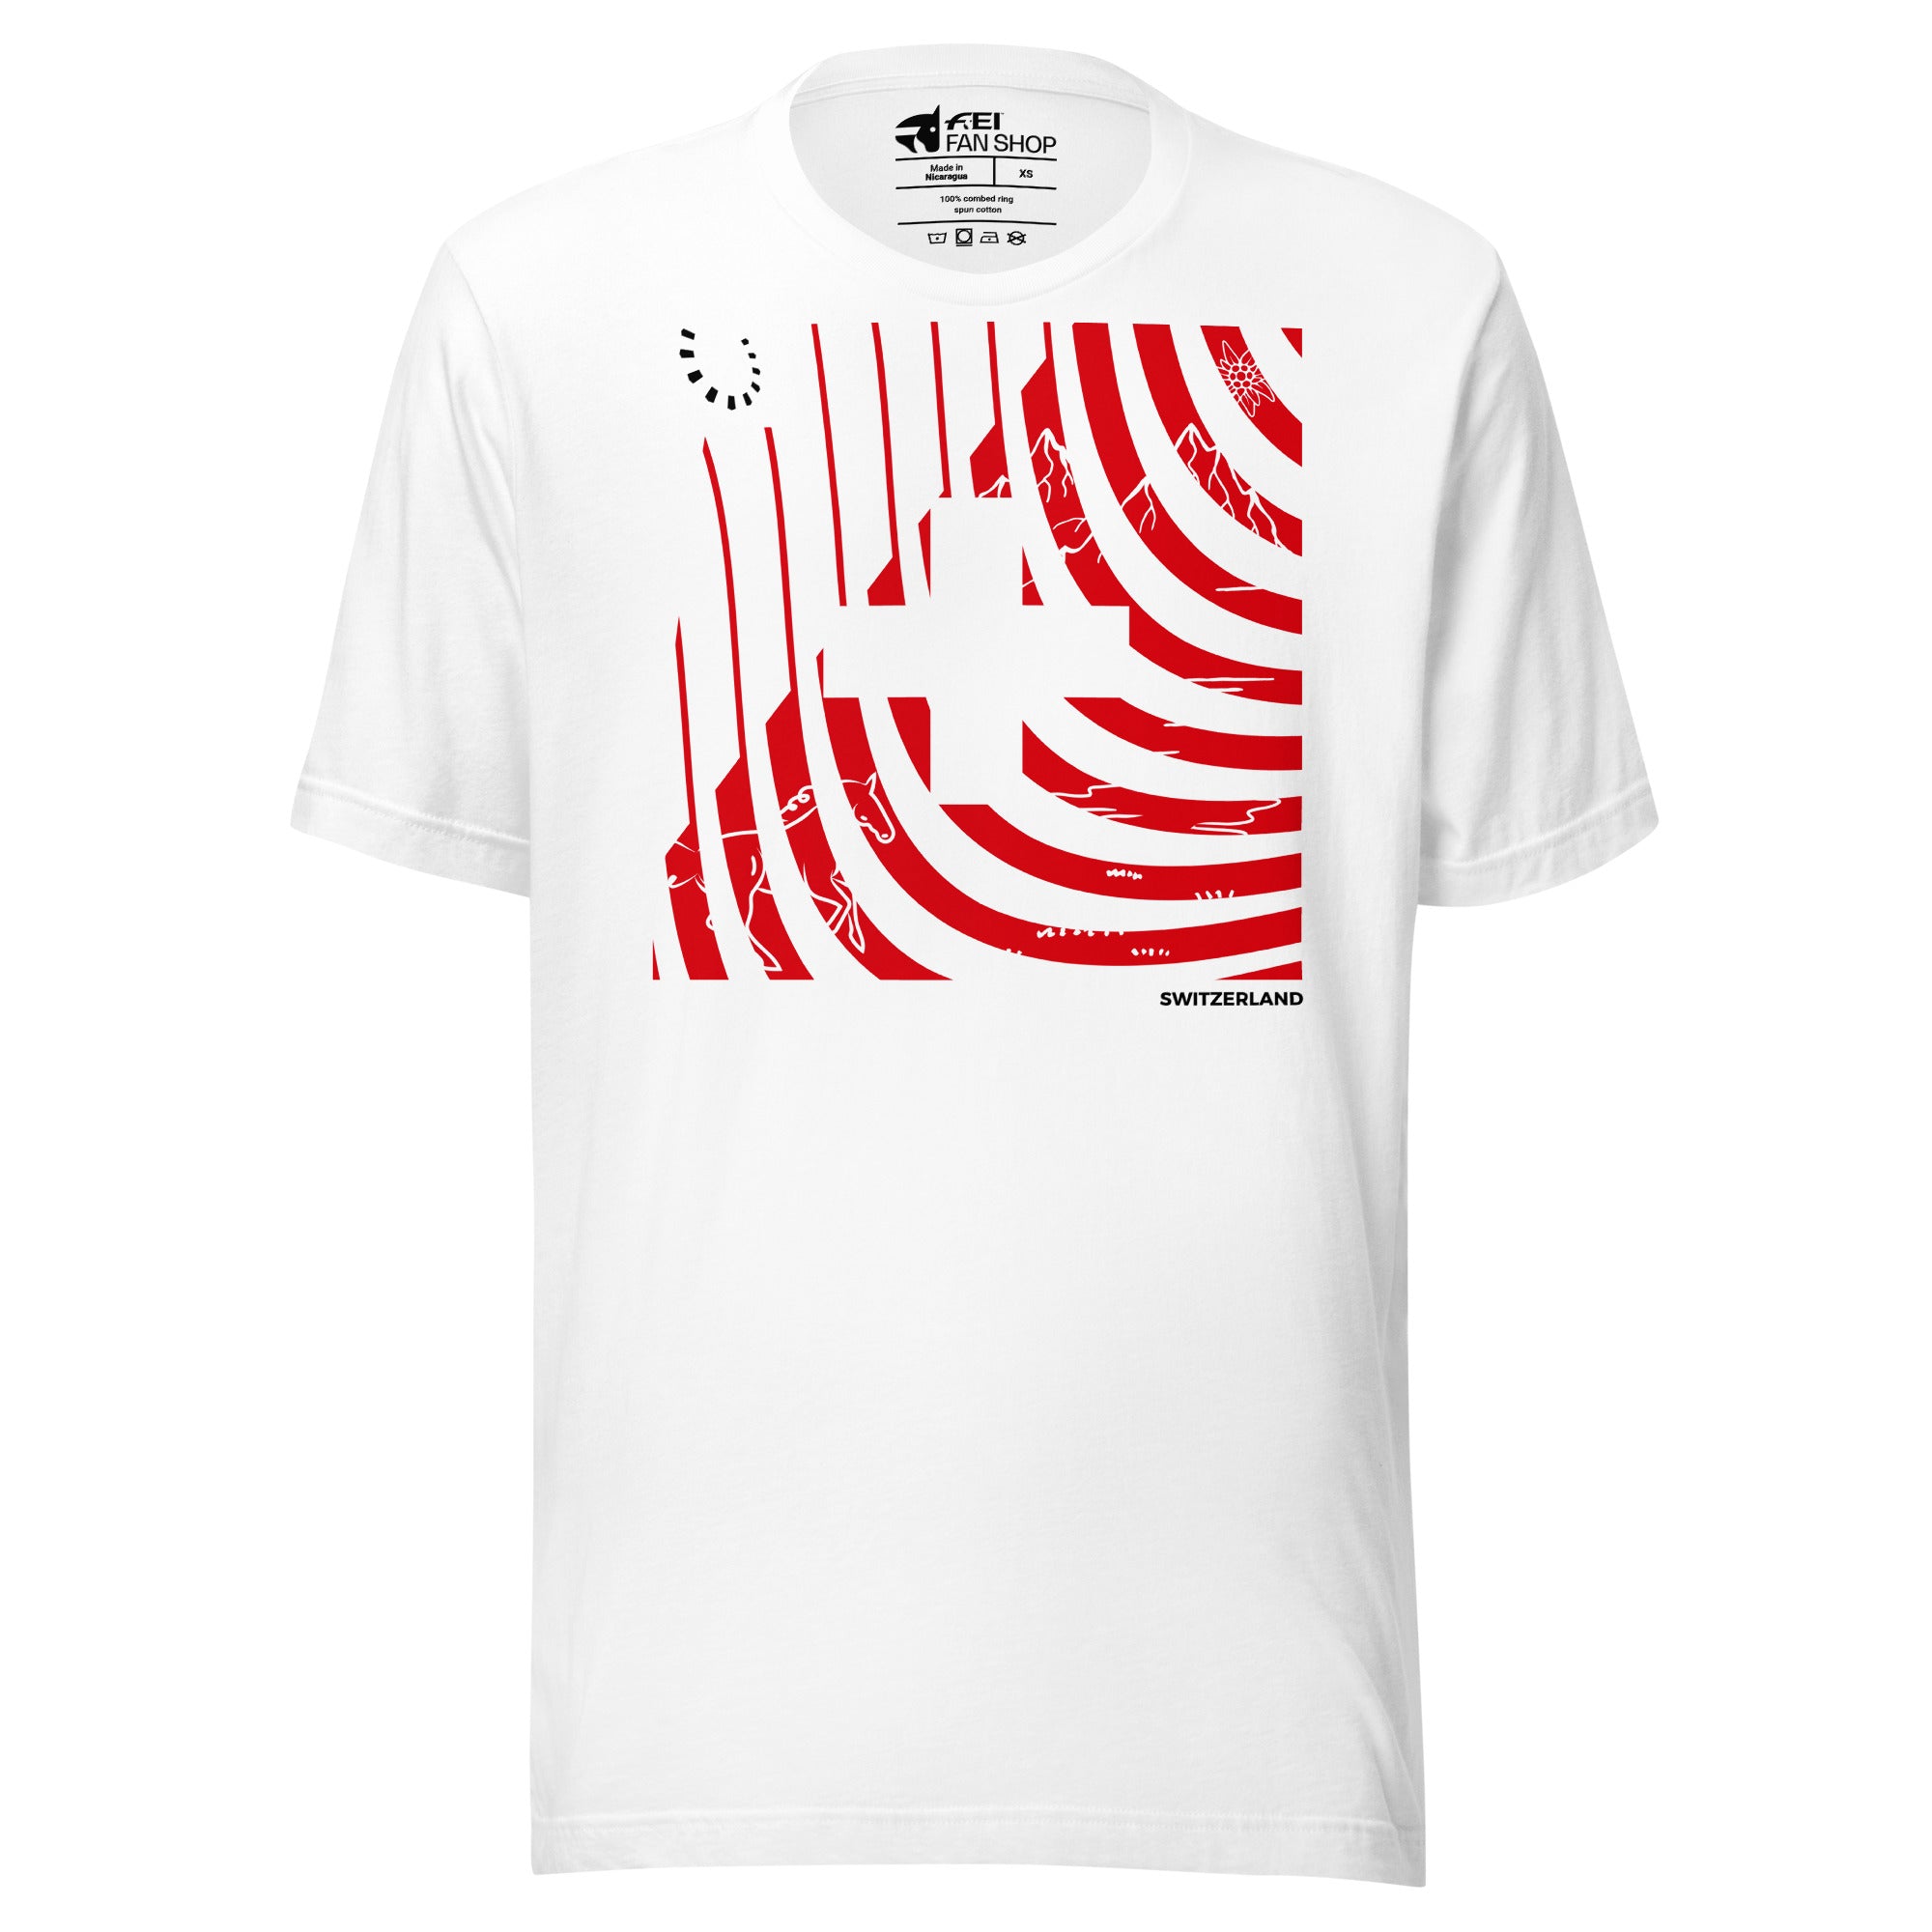 LLN St Gallen Unisex White T-shirt FEI Official Store